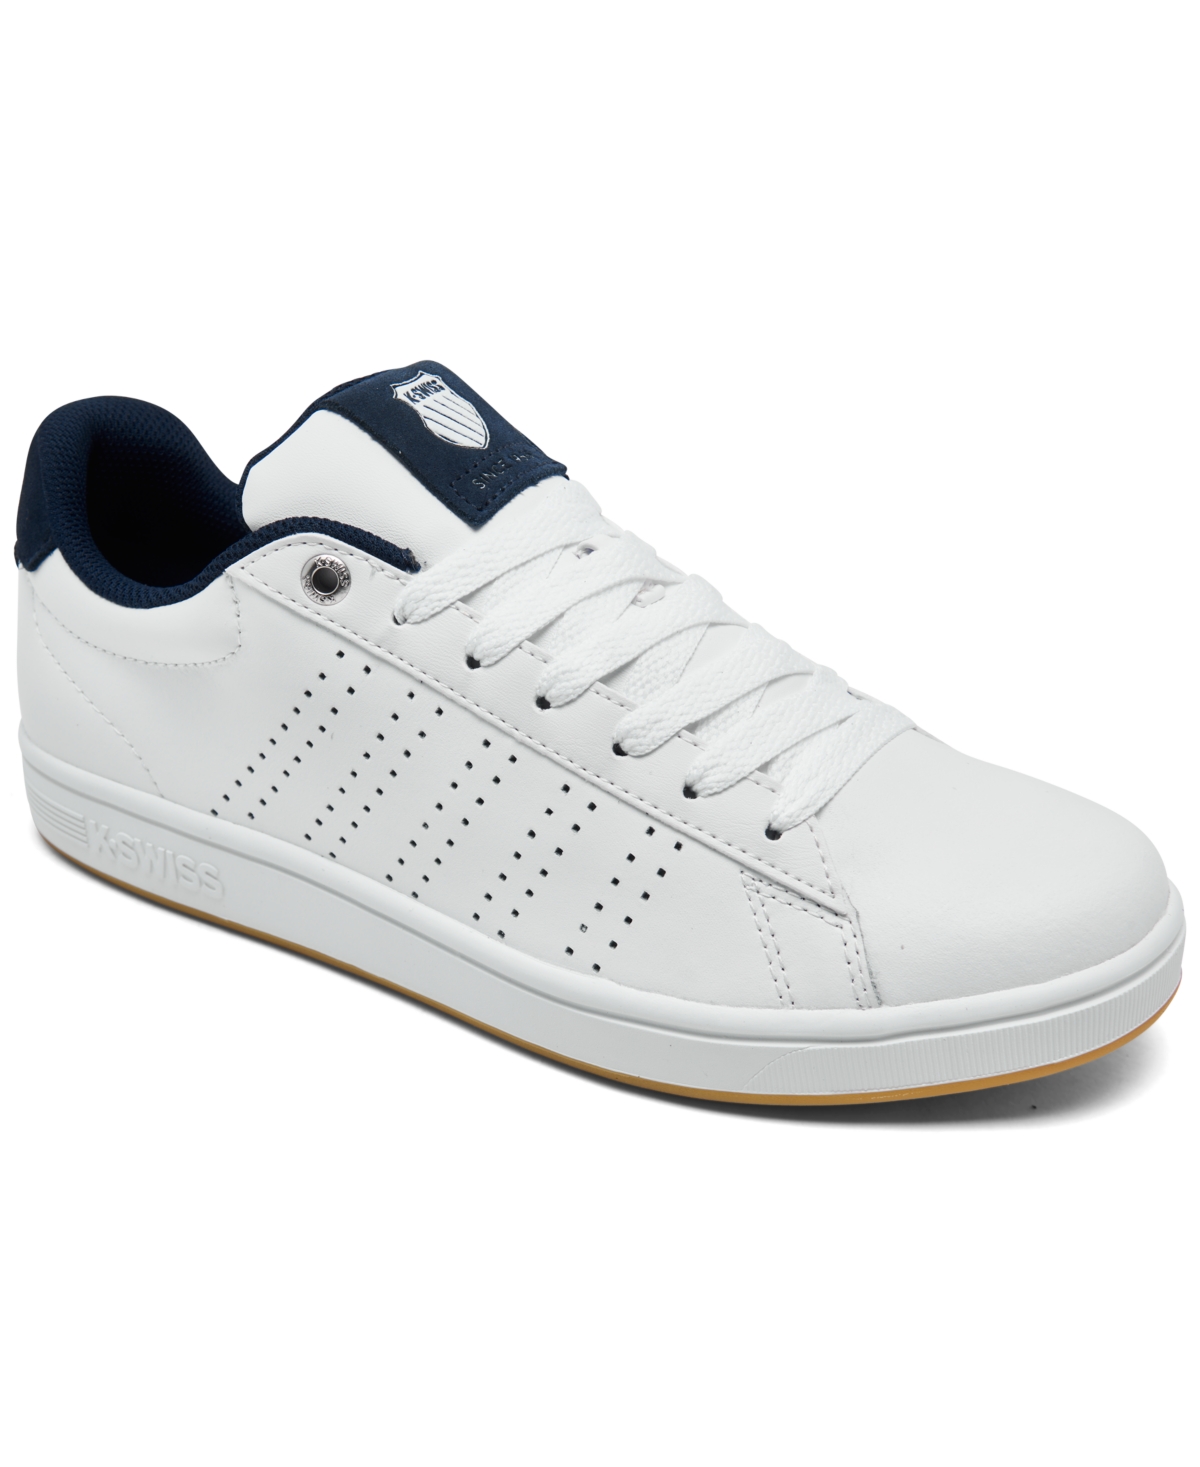 Men's Court Casper Casual Sneakers from Finish Line - White, Navy, Gum